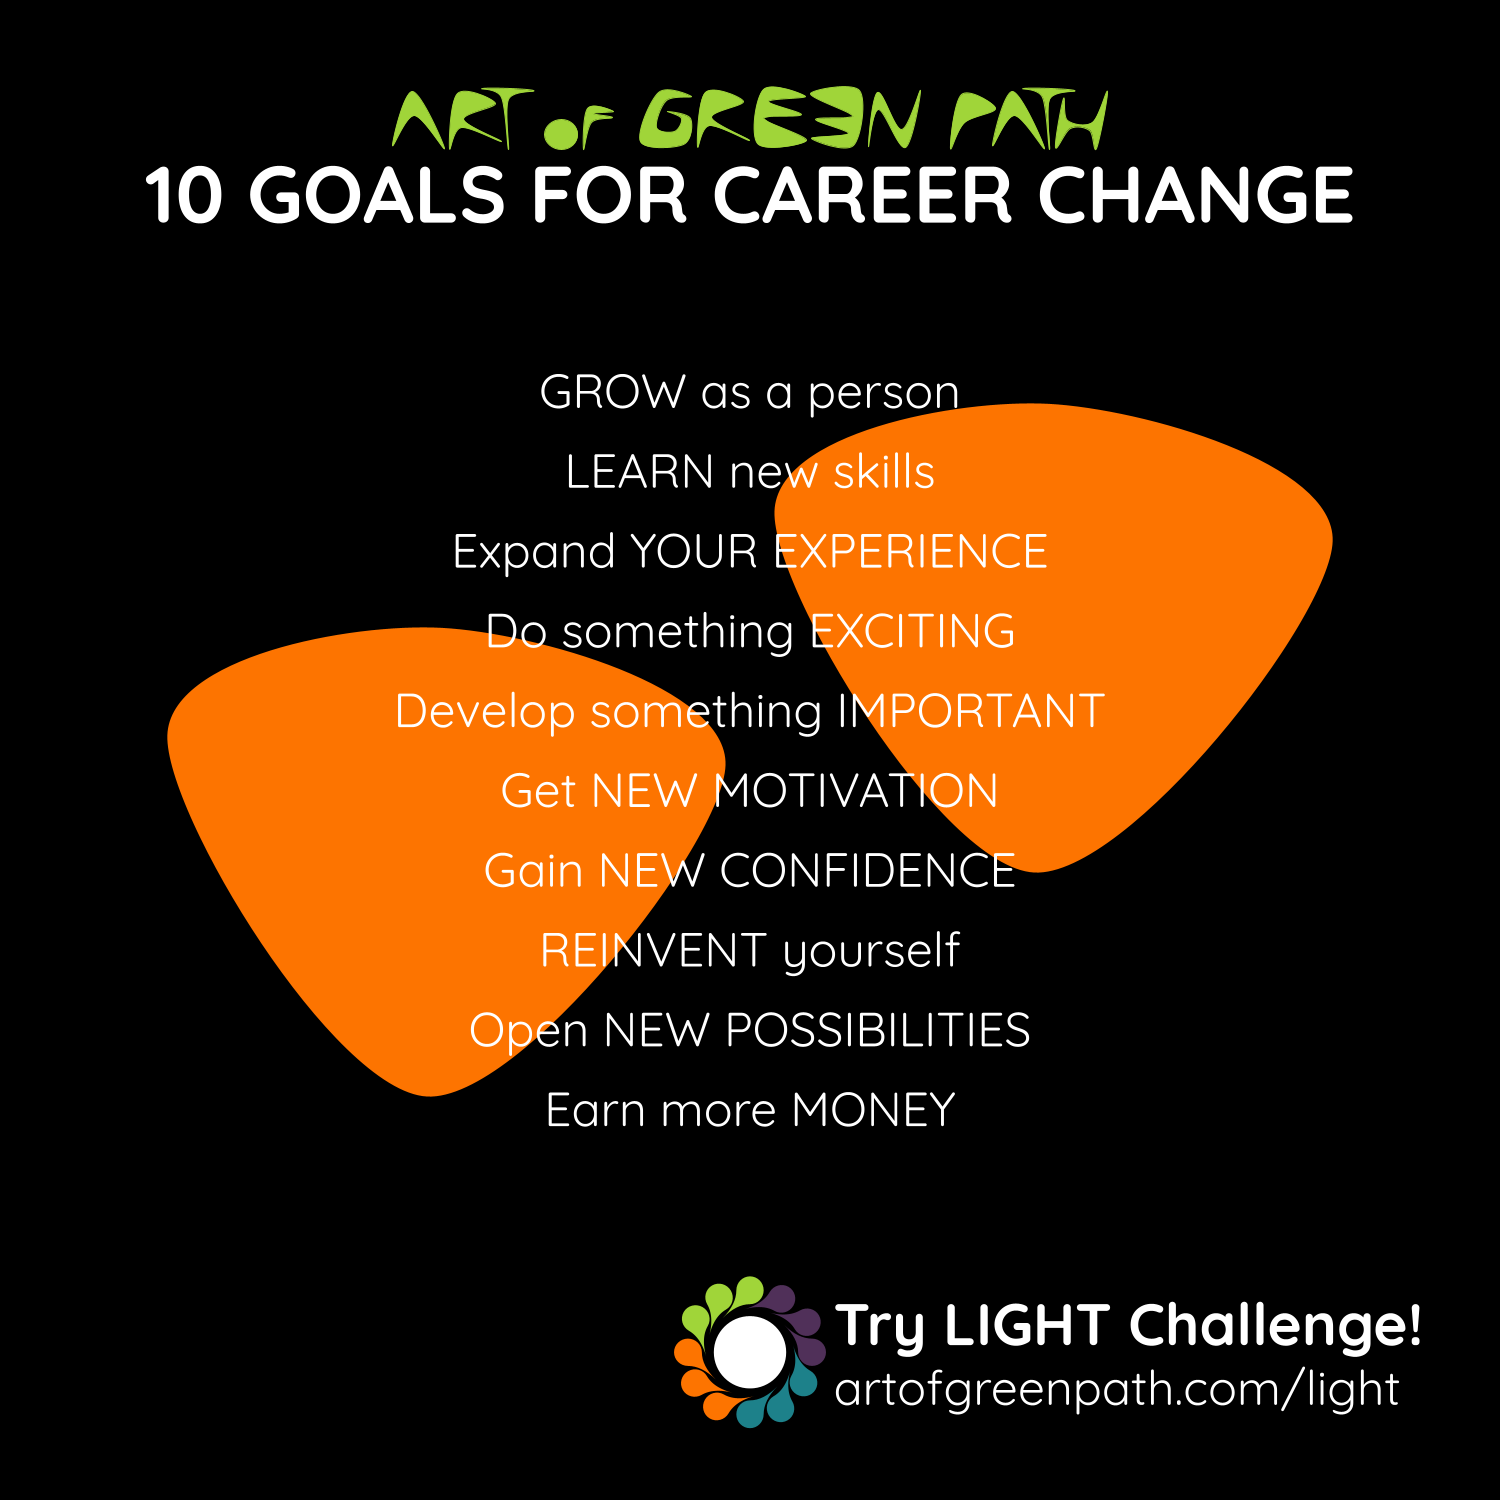 Art Of Green Path - Career Change - Goals For Career Development